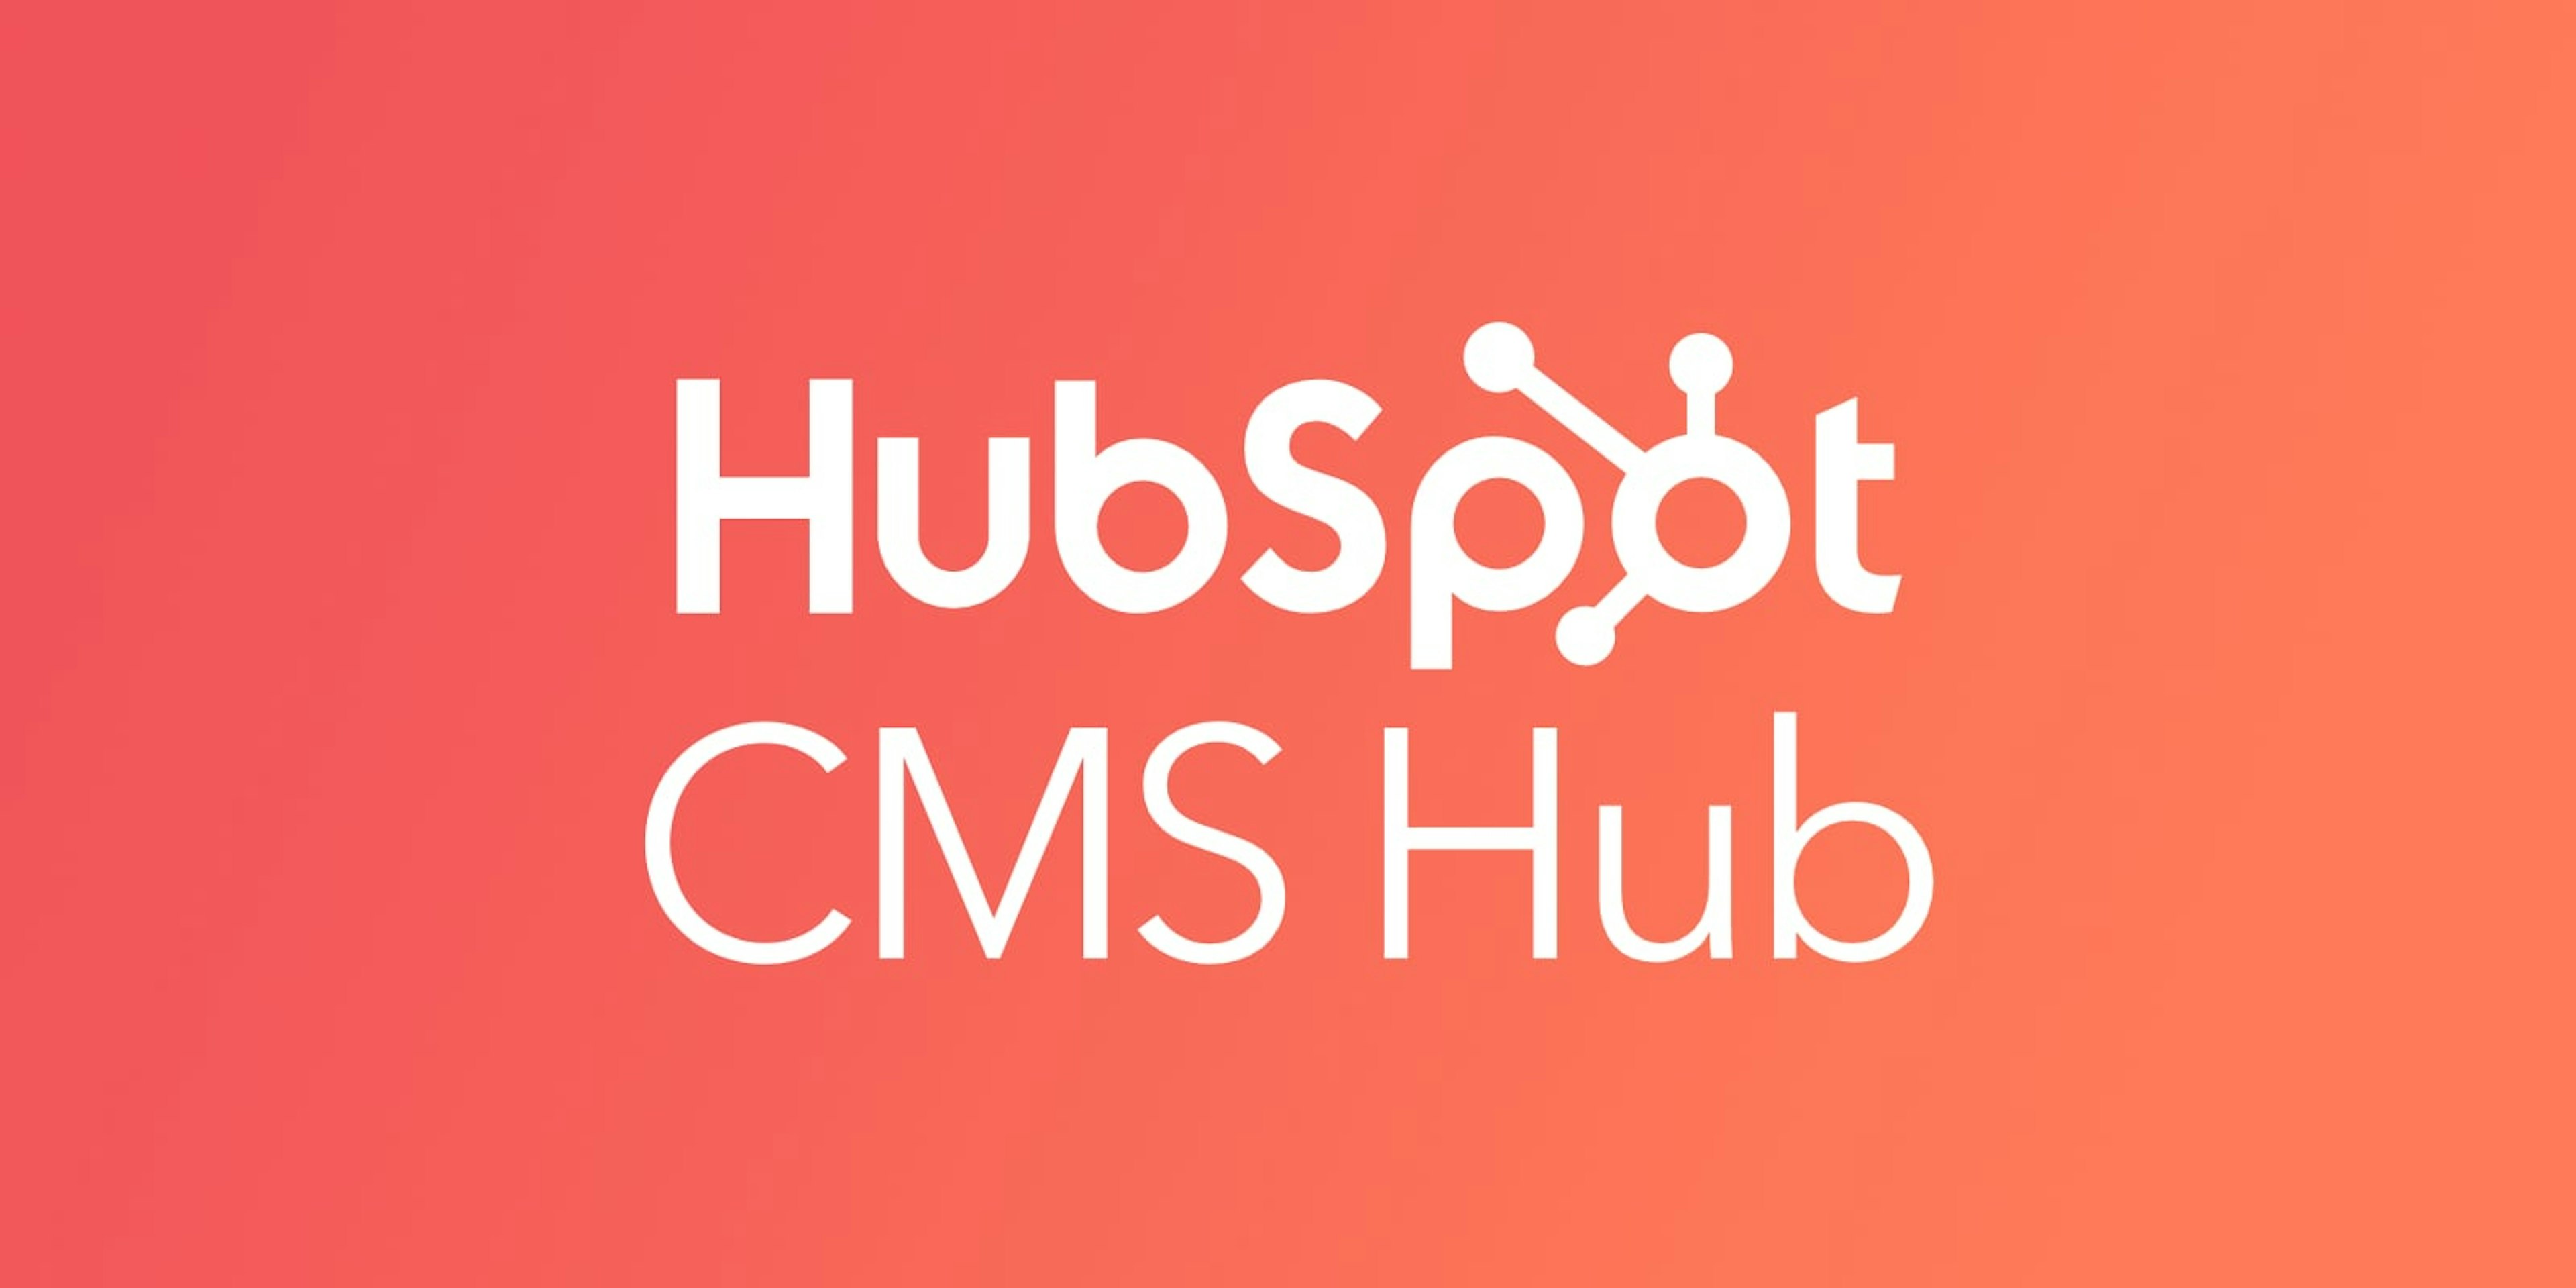 hubspot-cms-hub-orange